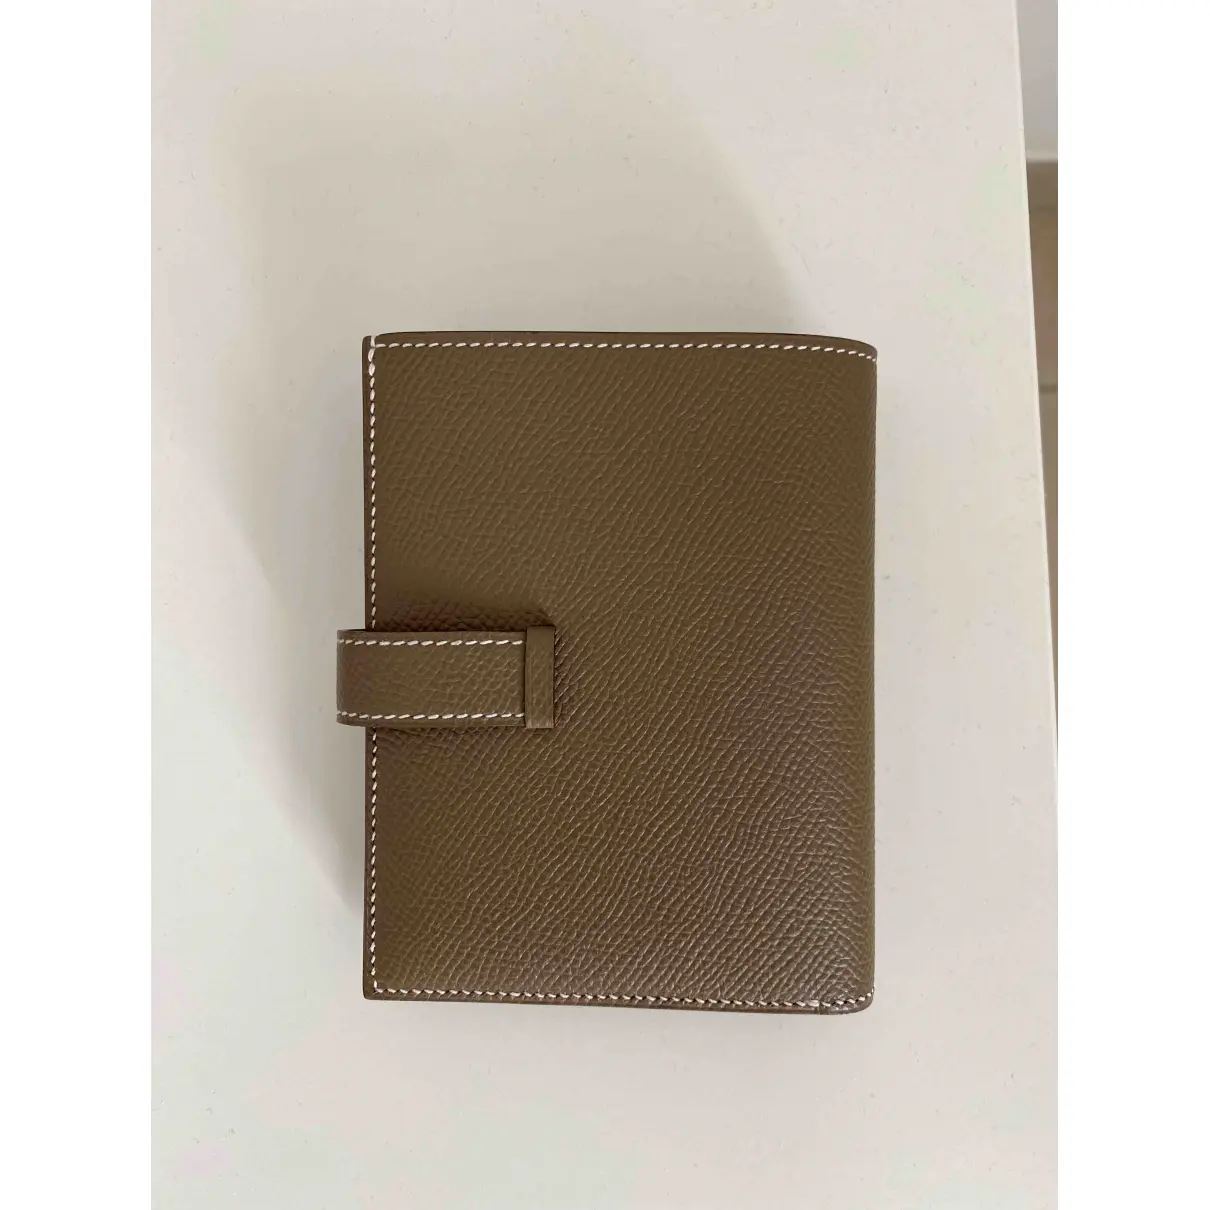 Buy Hermès Béarn leather wallet online